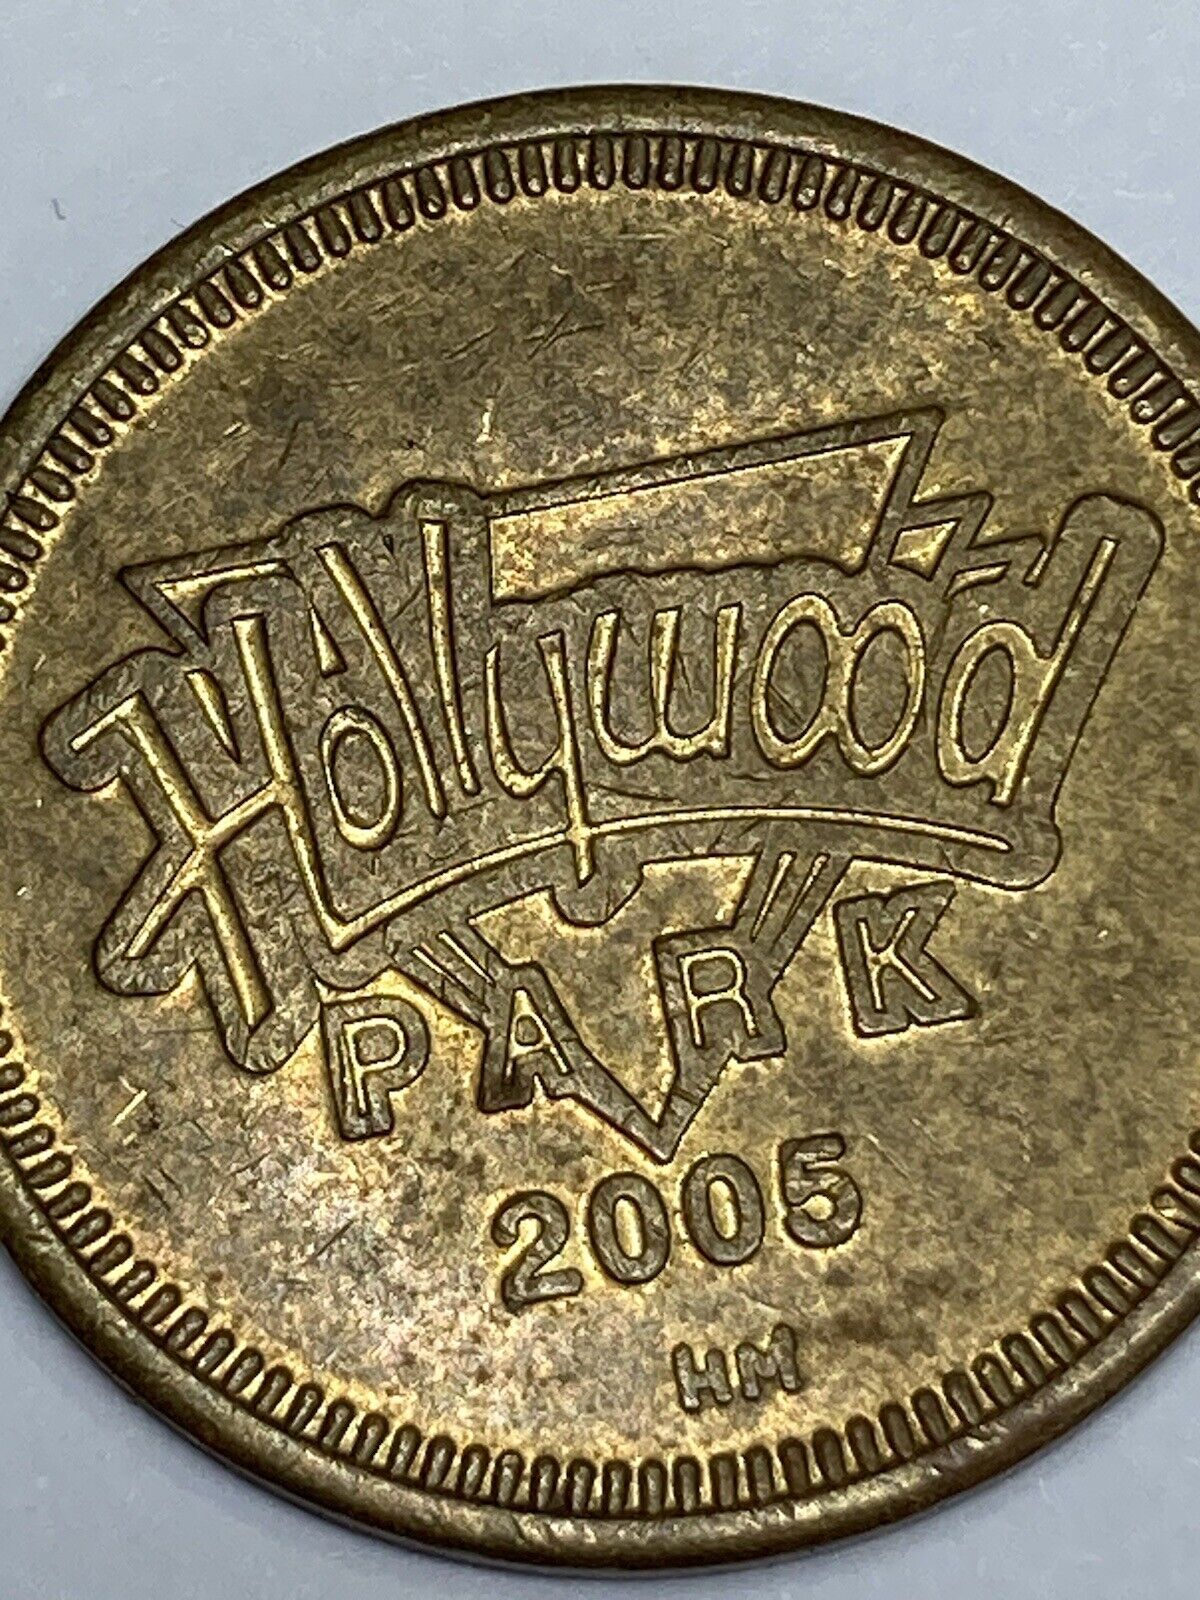 Hollywood Park 2005 Arcade Token - Crestwood, Illinois (Obsolete, Retired) #g01